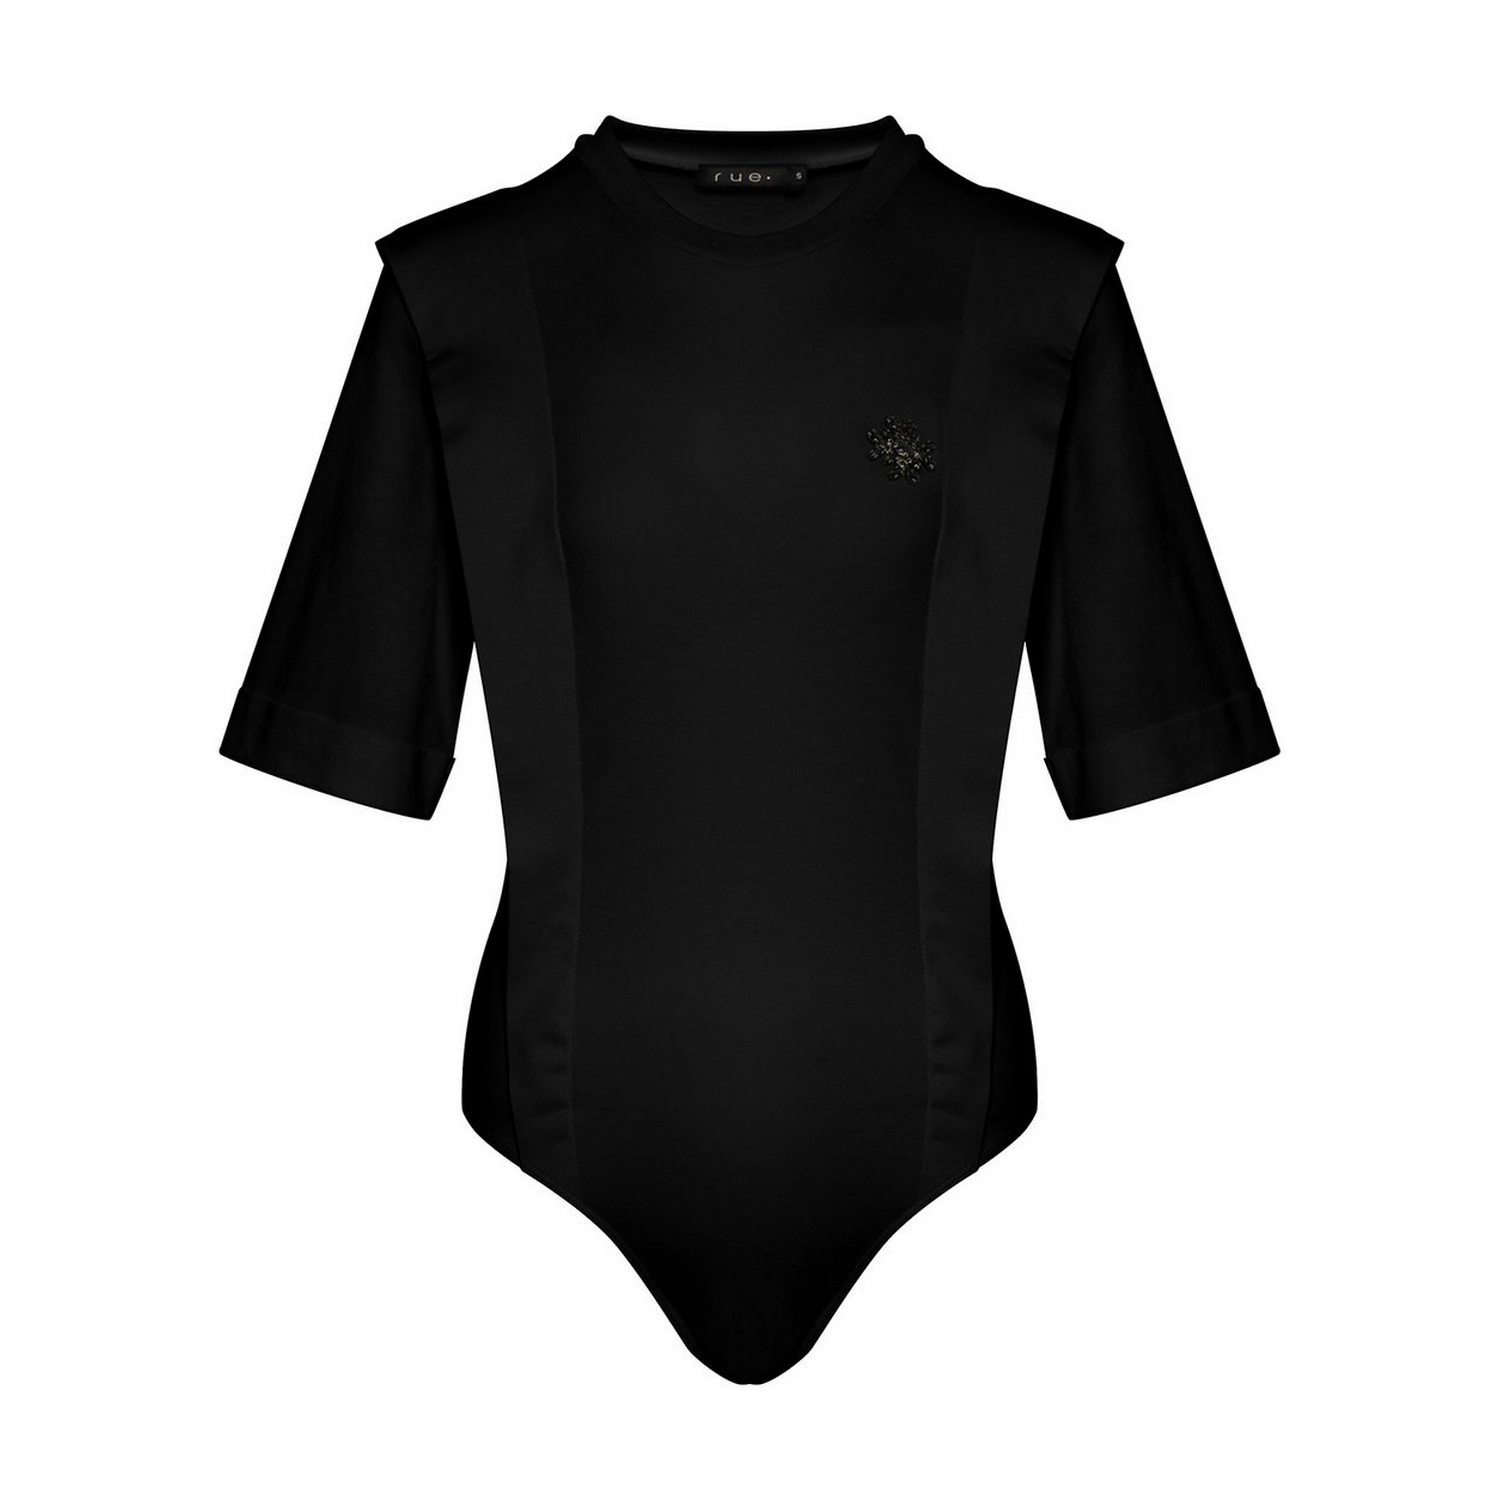 Accessorized Short Sleeve Black Bodysuit